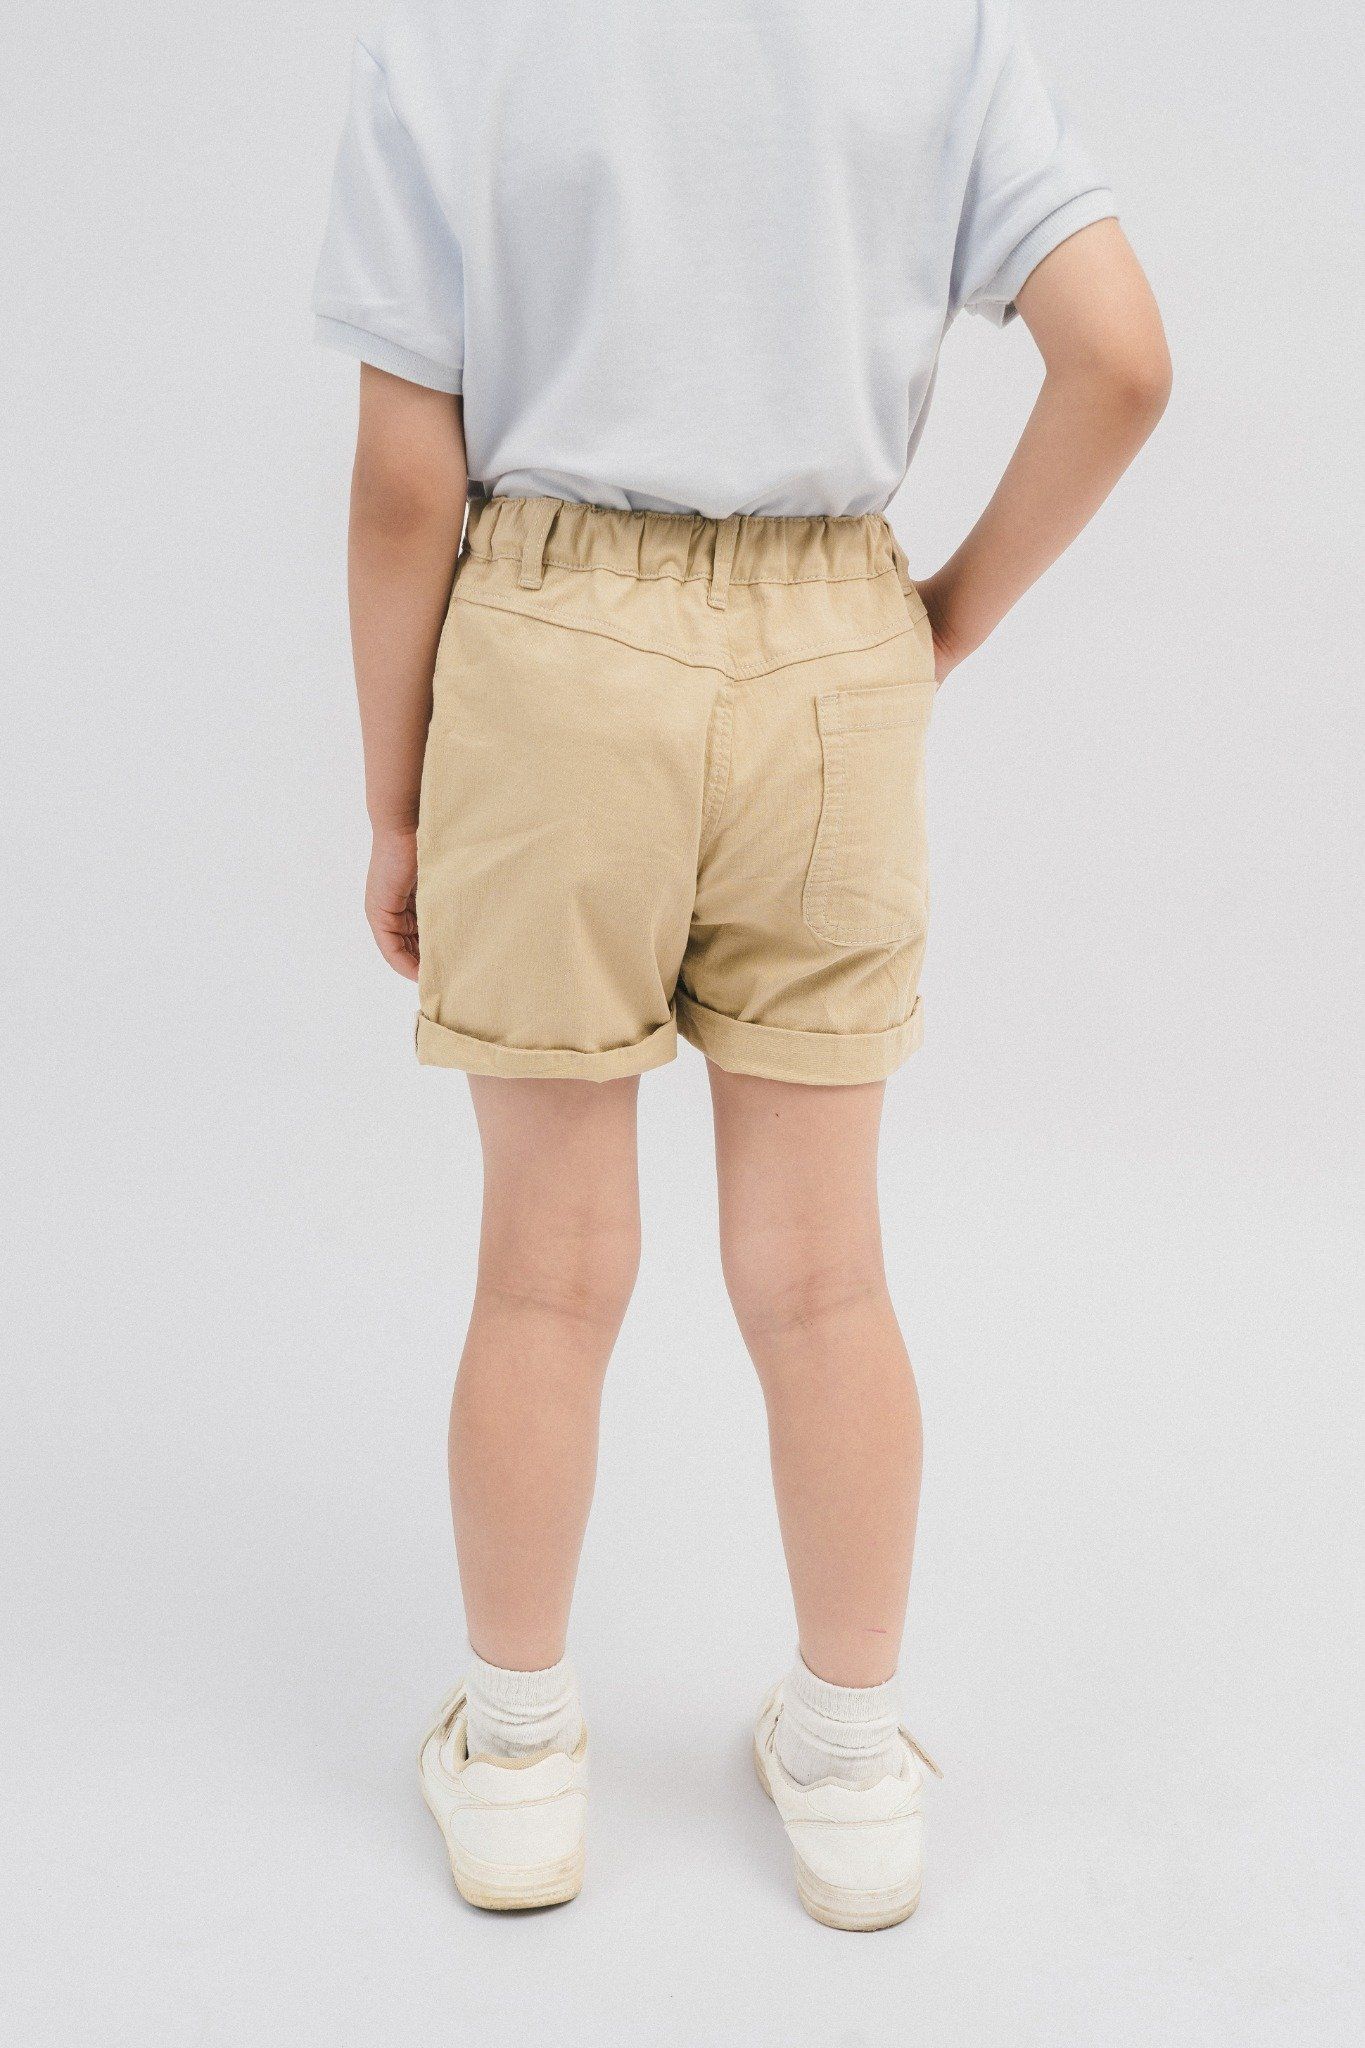  Quần shorts bé trai khaki cạp chun 